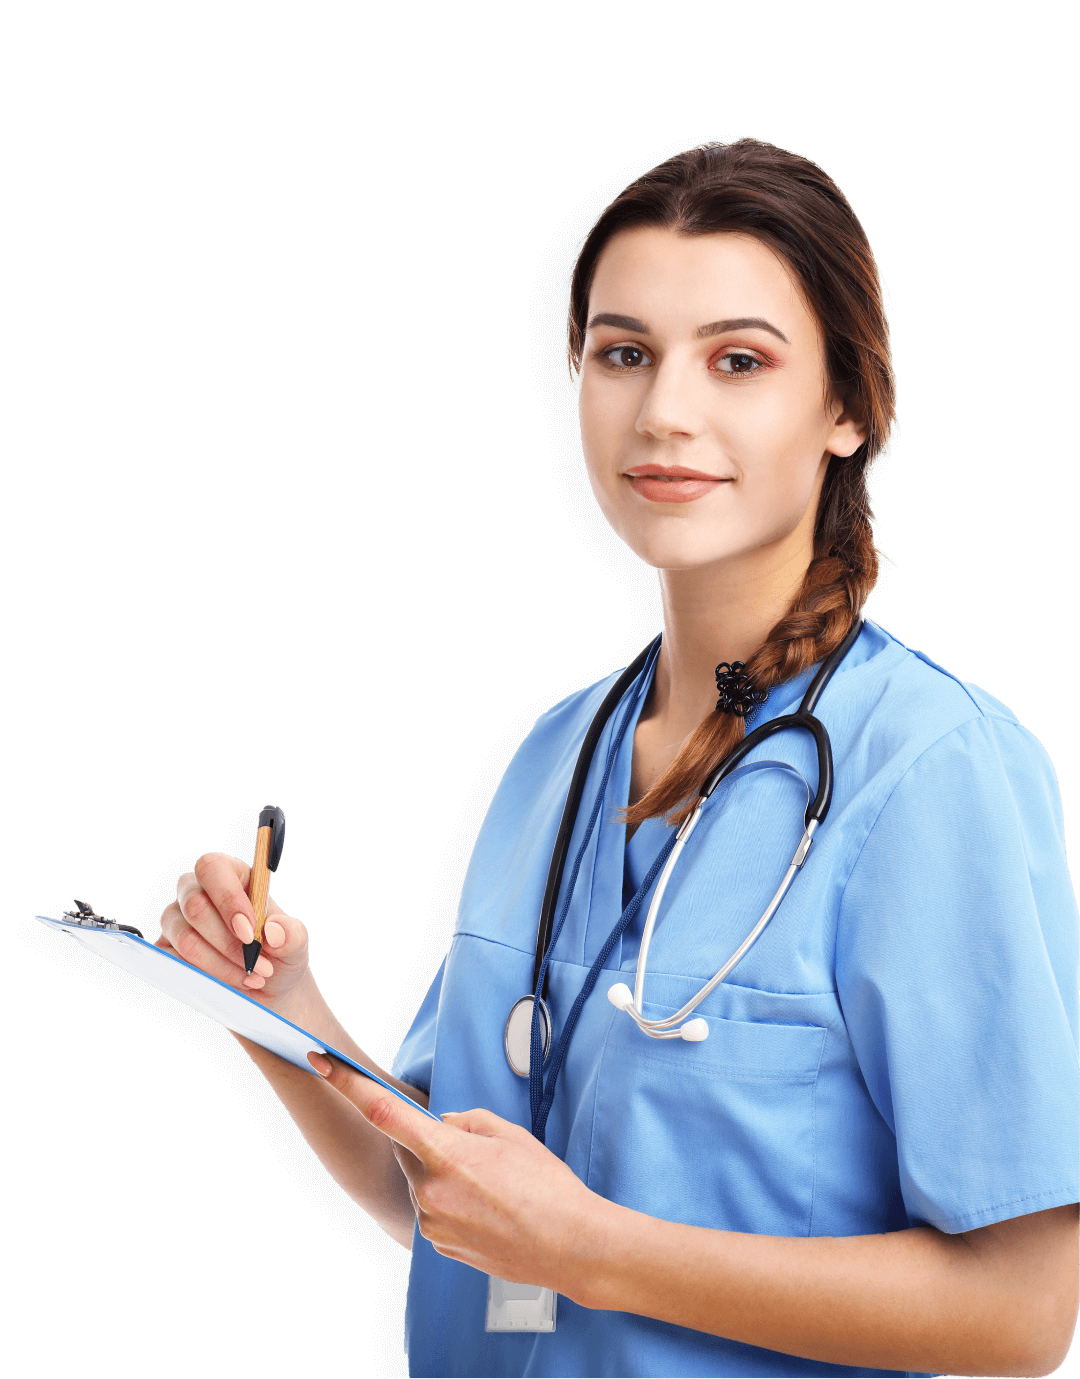 Nurse-Bariatric (CBN) professional